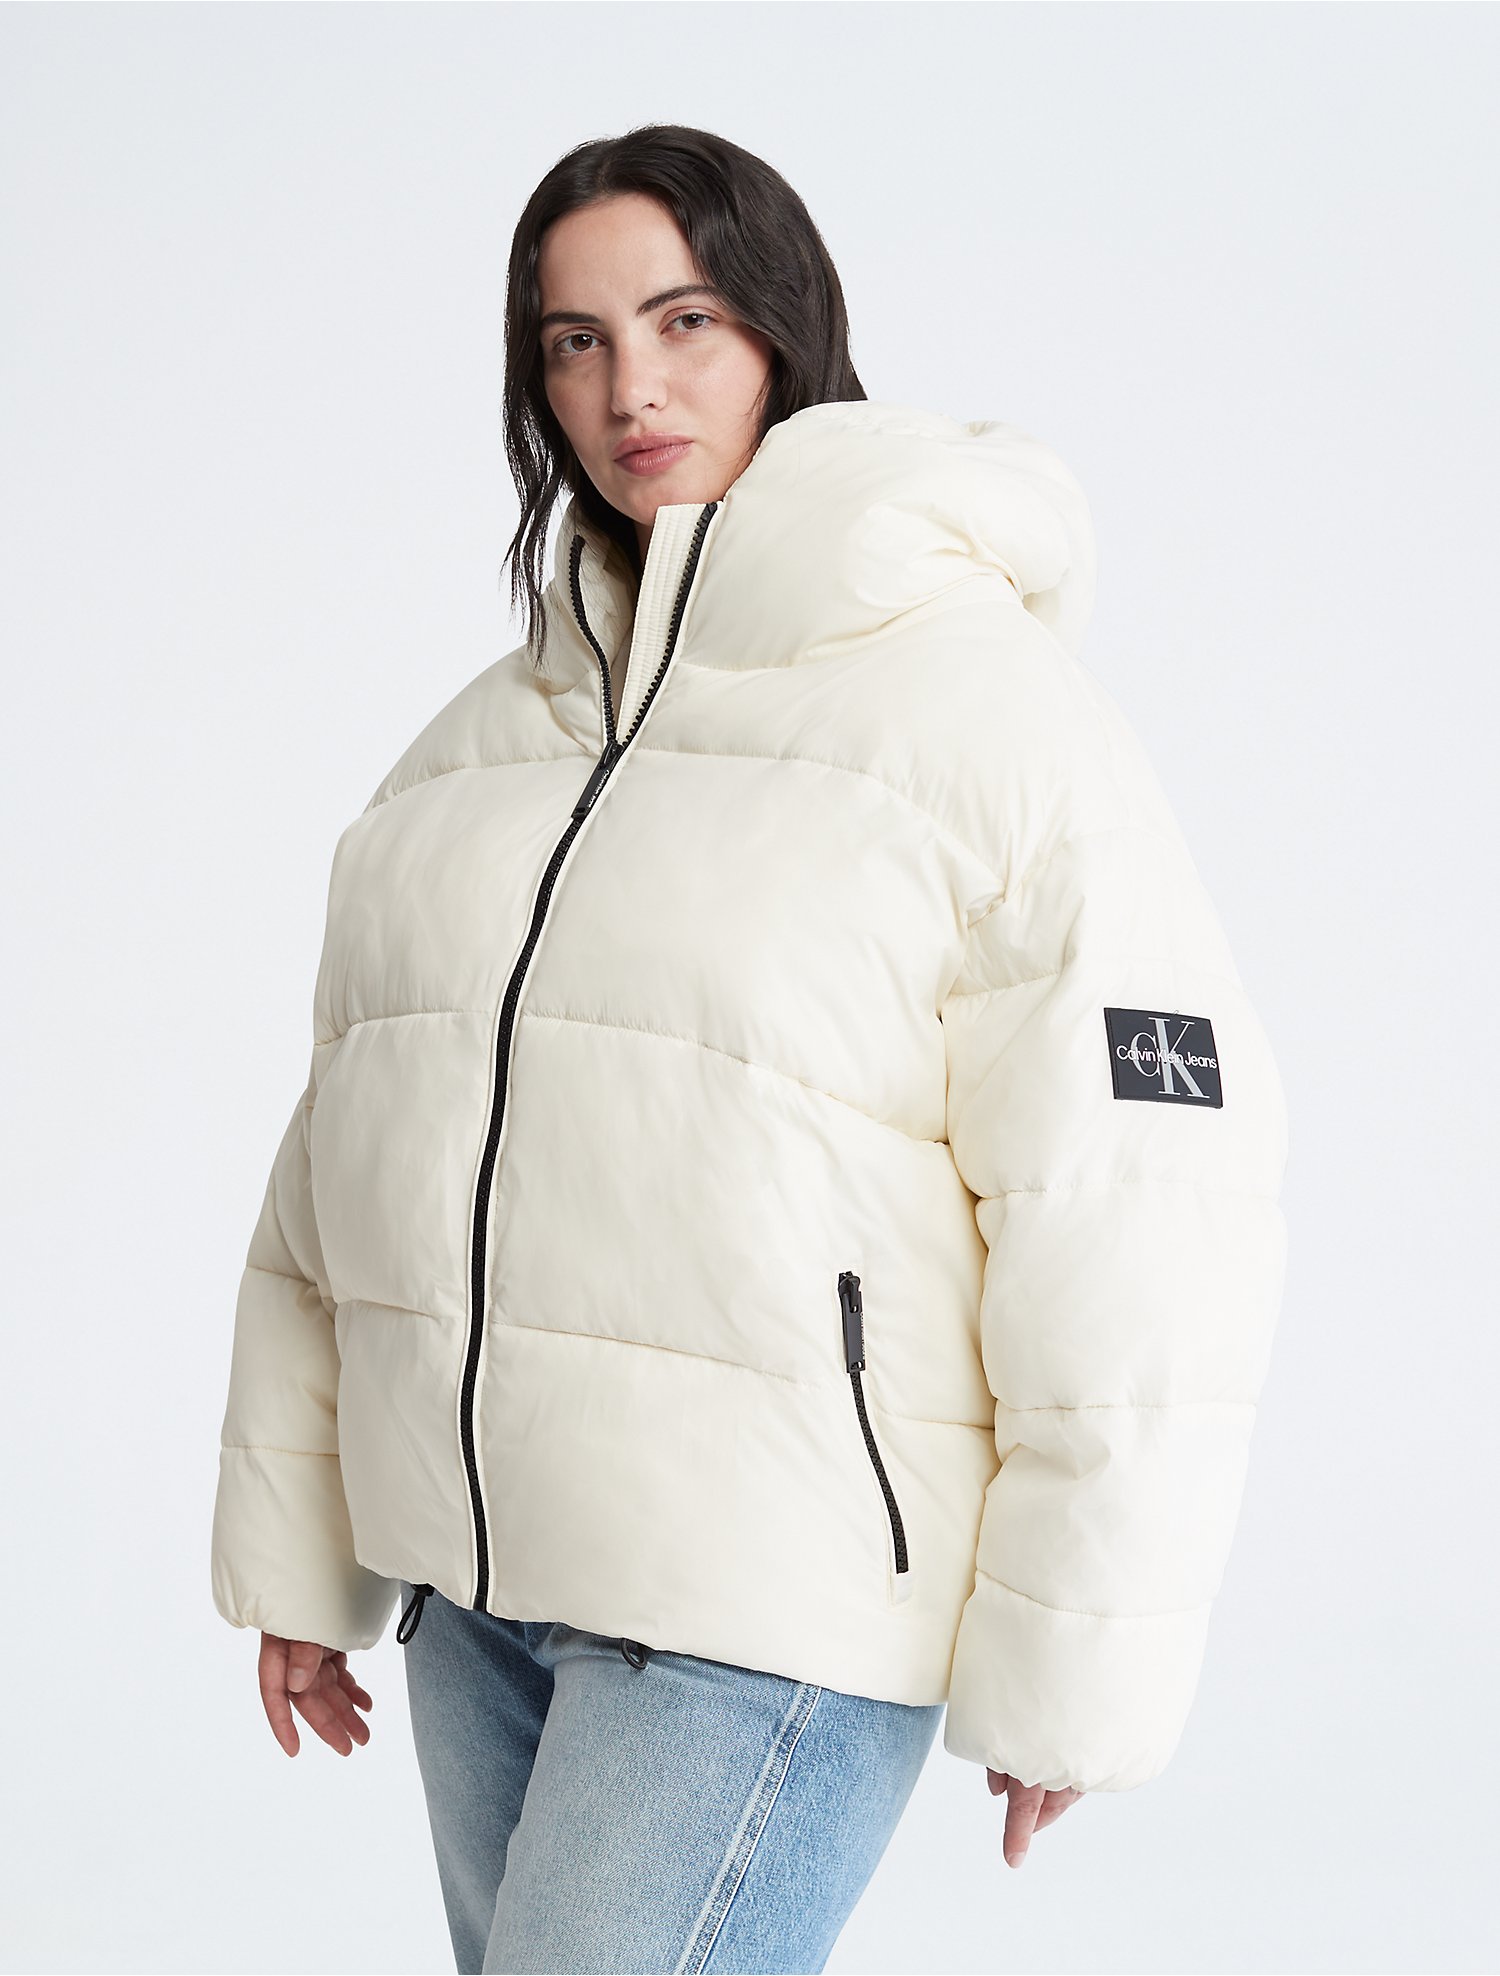 Introducir 39+ imagen calvin klein jacket plus size